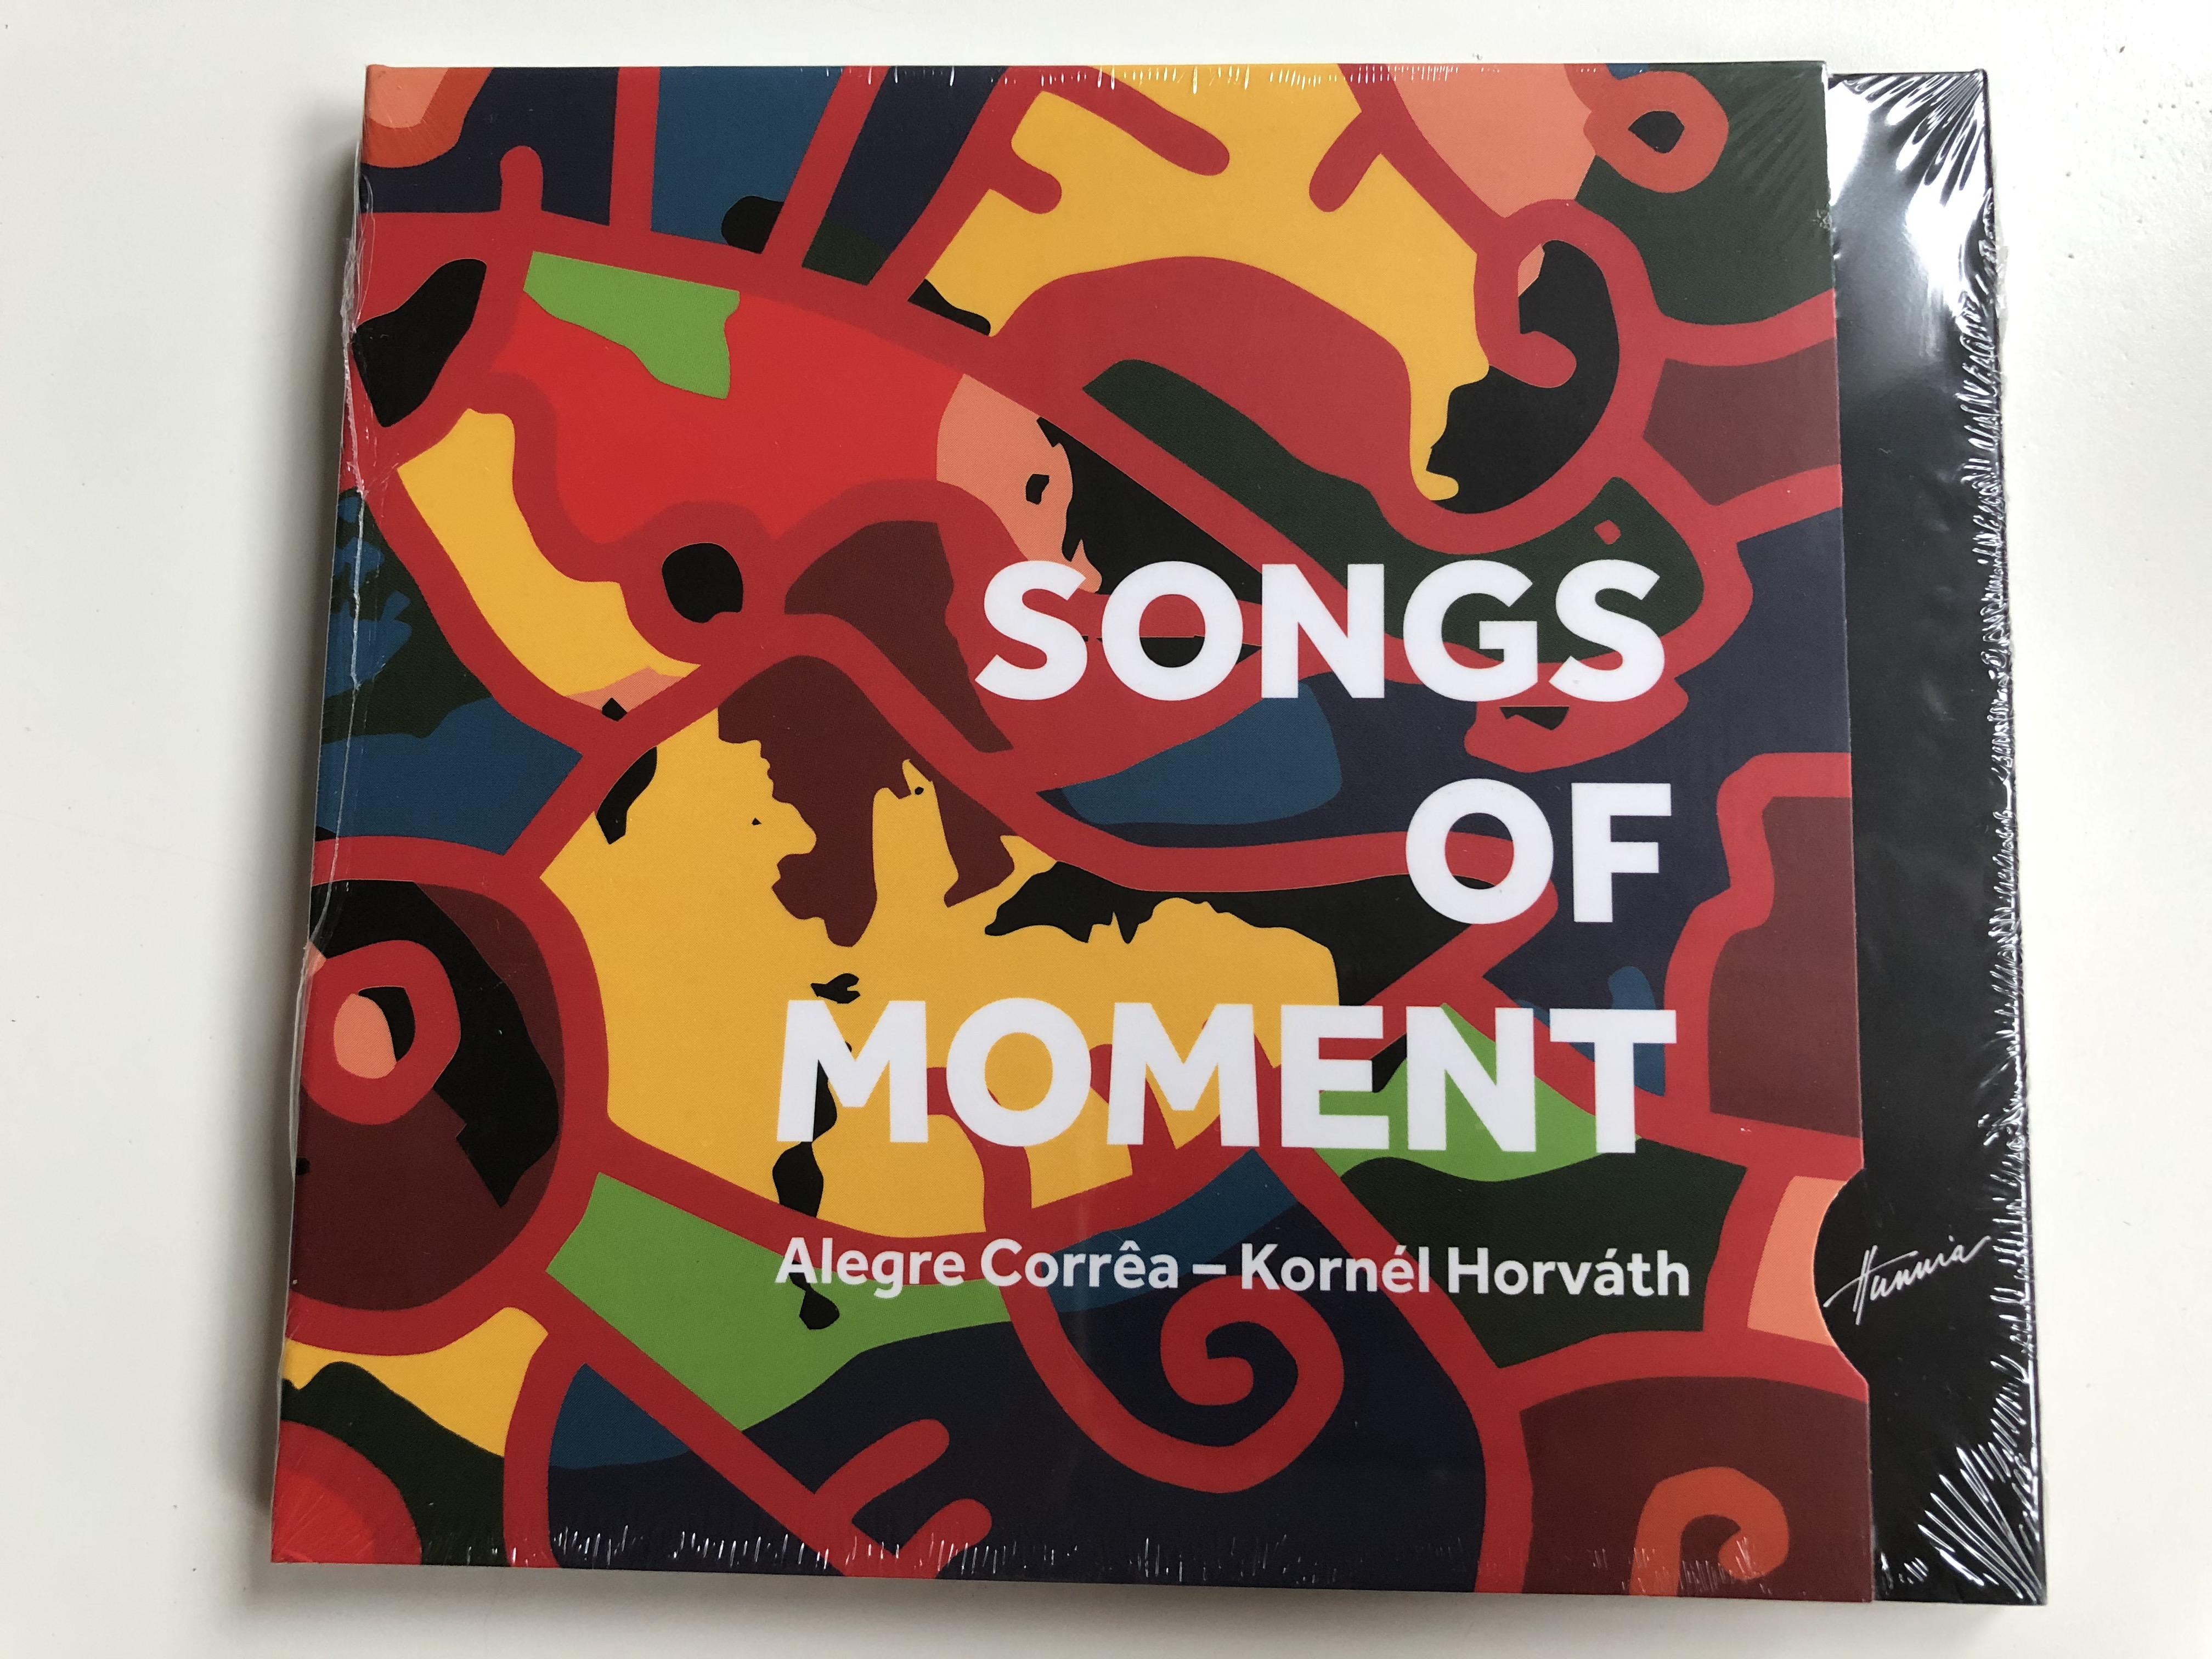 songs-of-moments-alegre-correa-kornel-horvath-hunnia-records-film-production-audio-cd-2010-hrcd-1004-1-.jpg